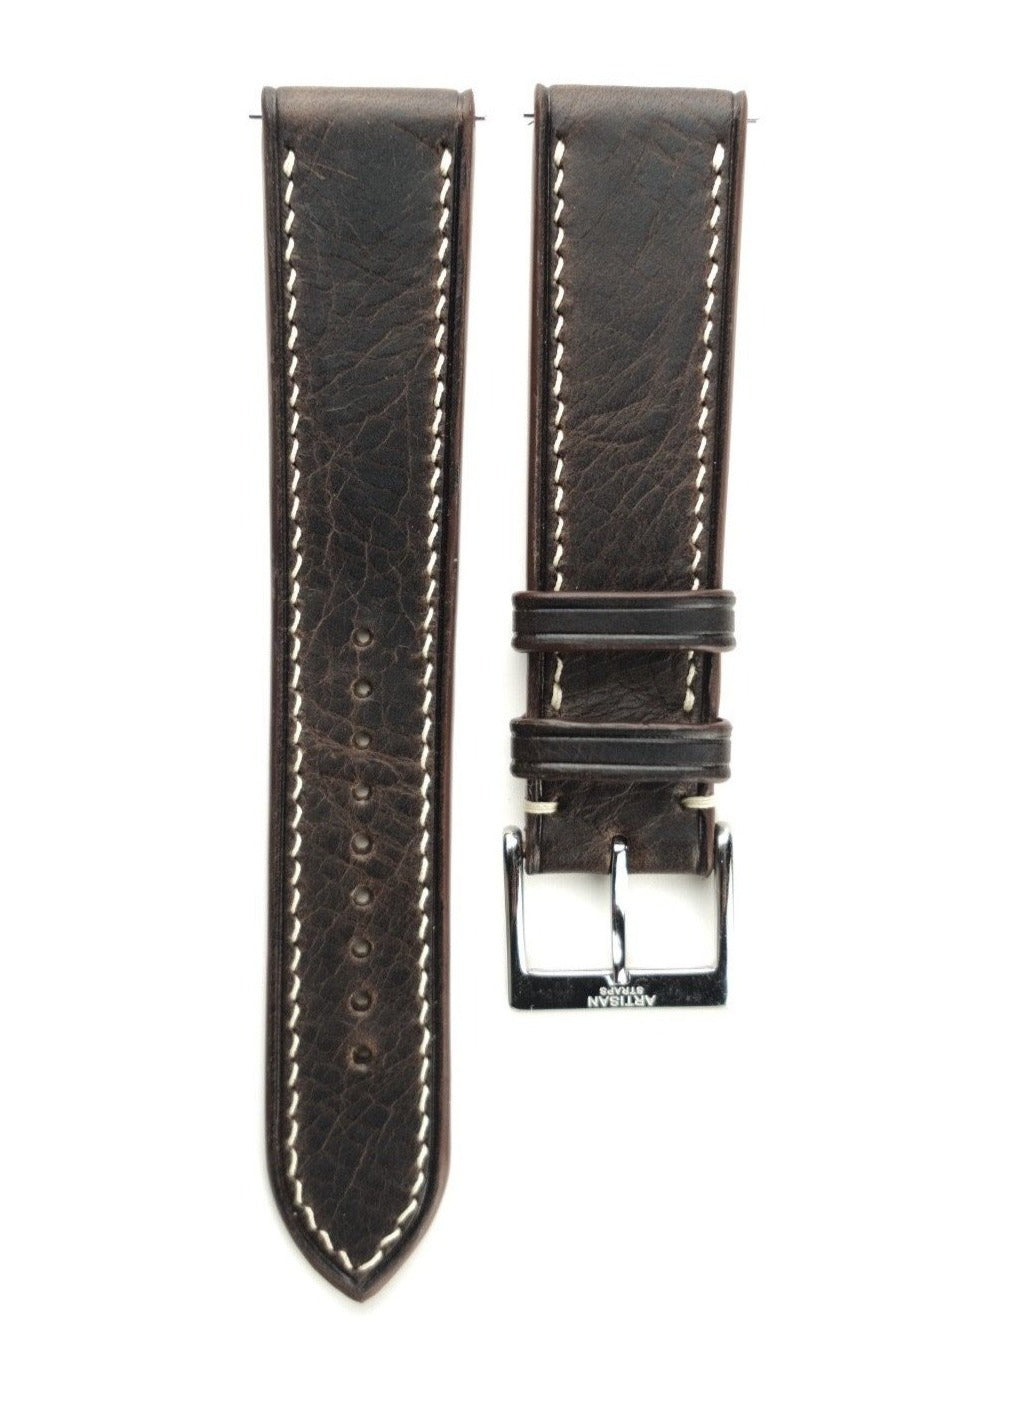 Italian Waxy Calf Leather Strap in Dark Brown - Artisan Straps